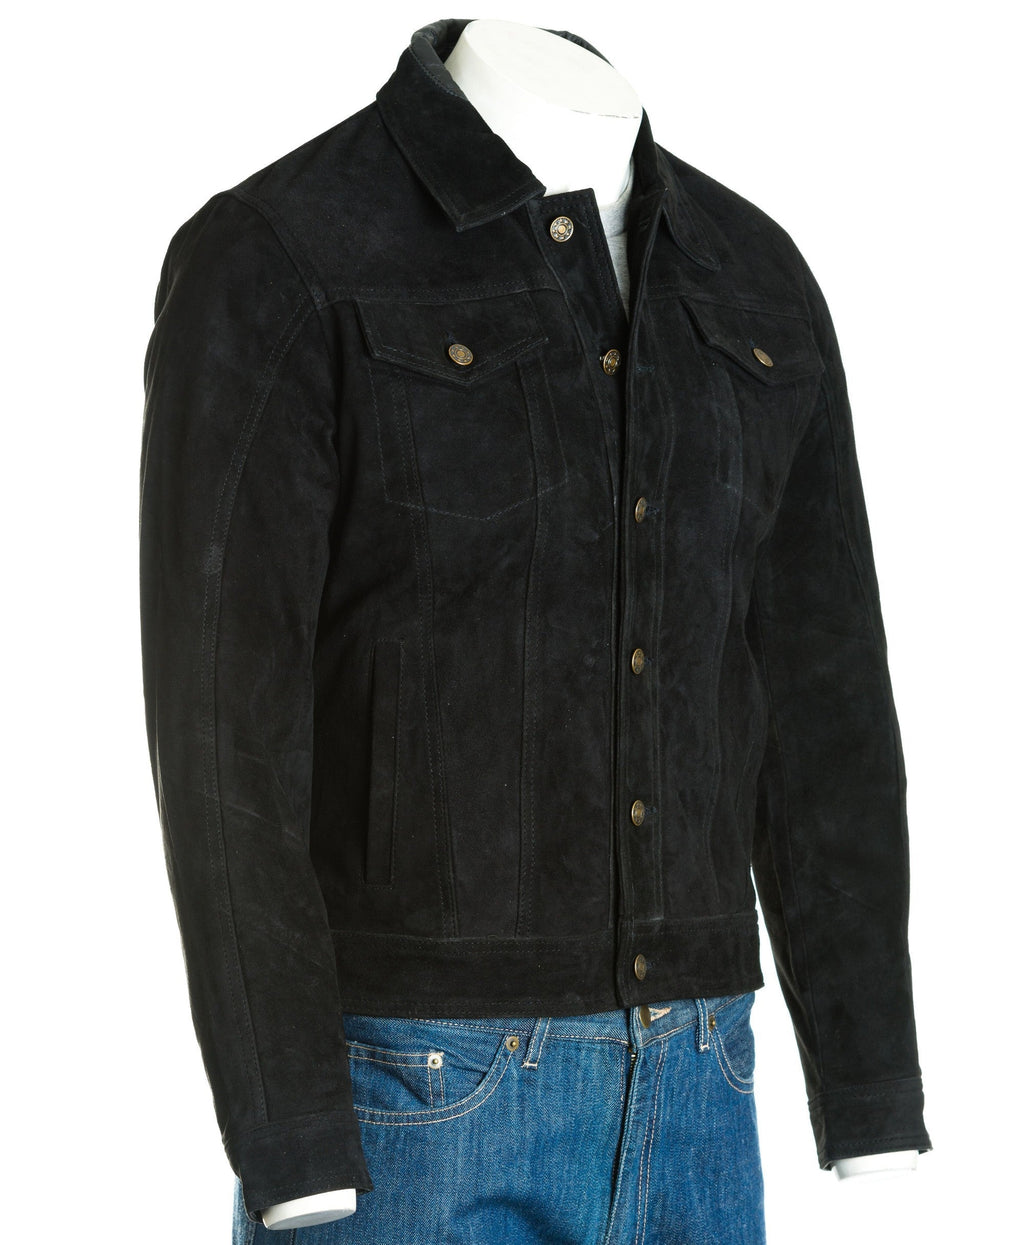 Men's Black Denim Shirt Style Suede Jacket: Antonio